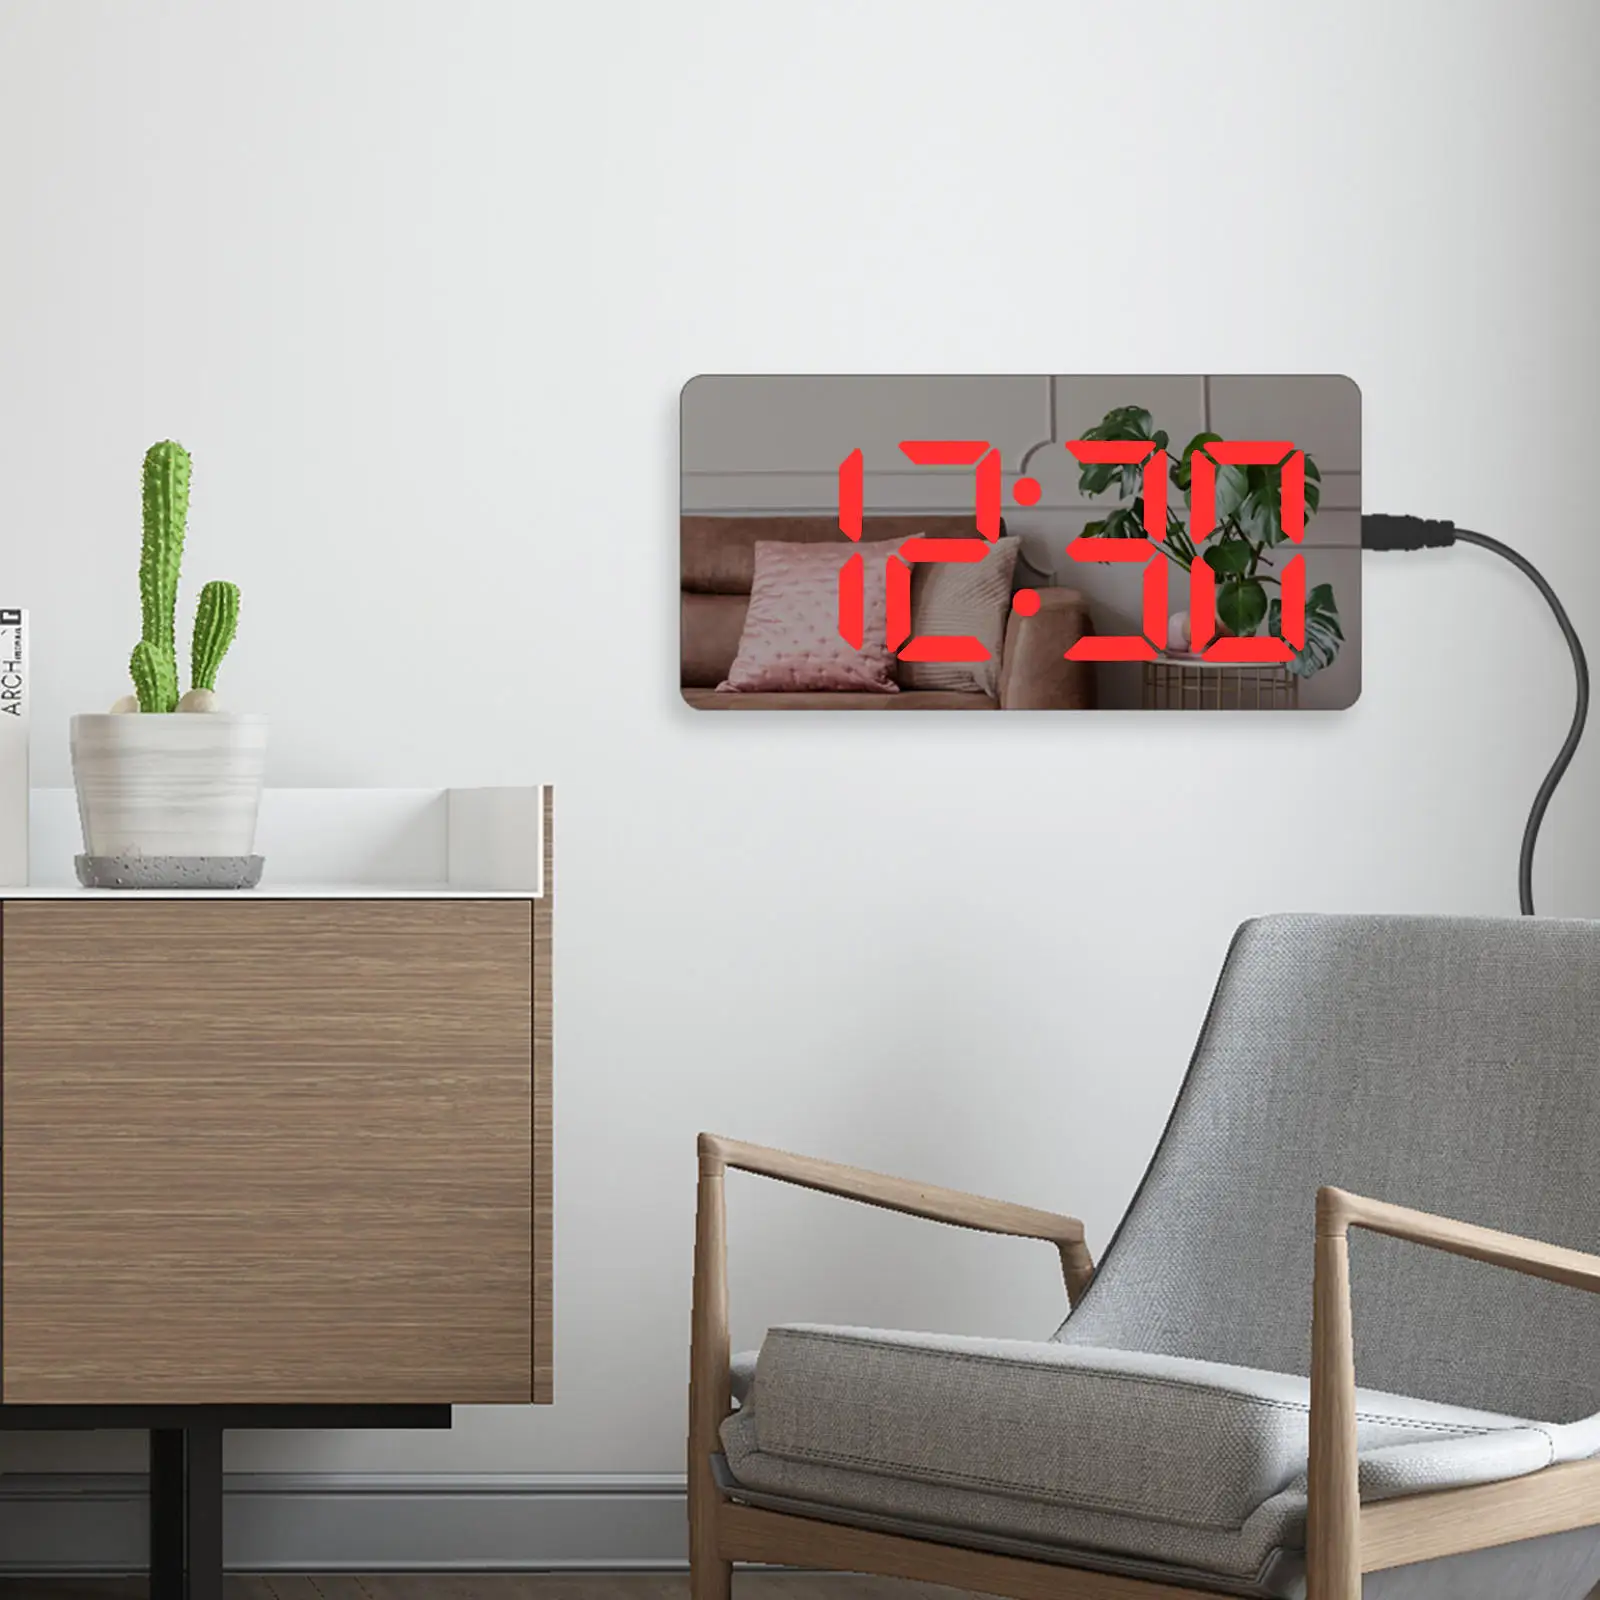 LED Digital Alarm Clock Mirror Phone Charging USB Snooze Temperature